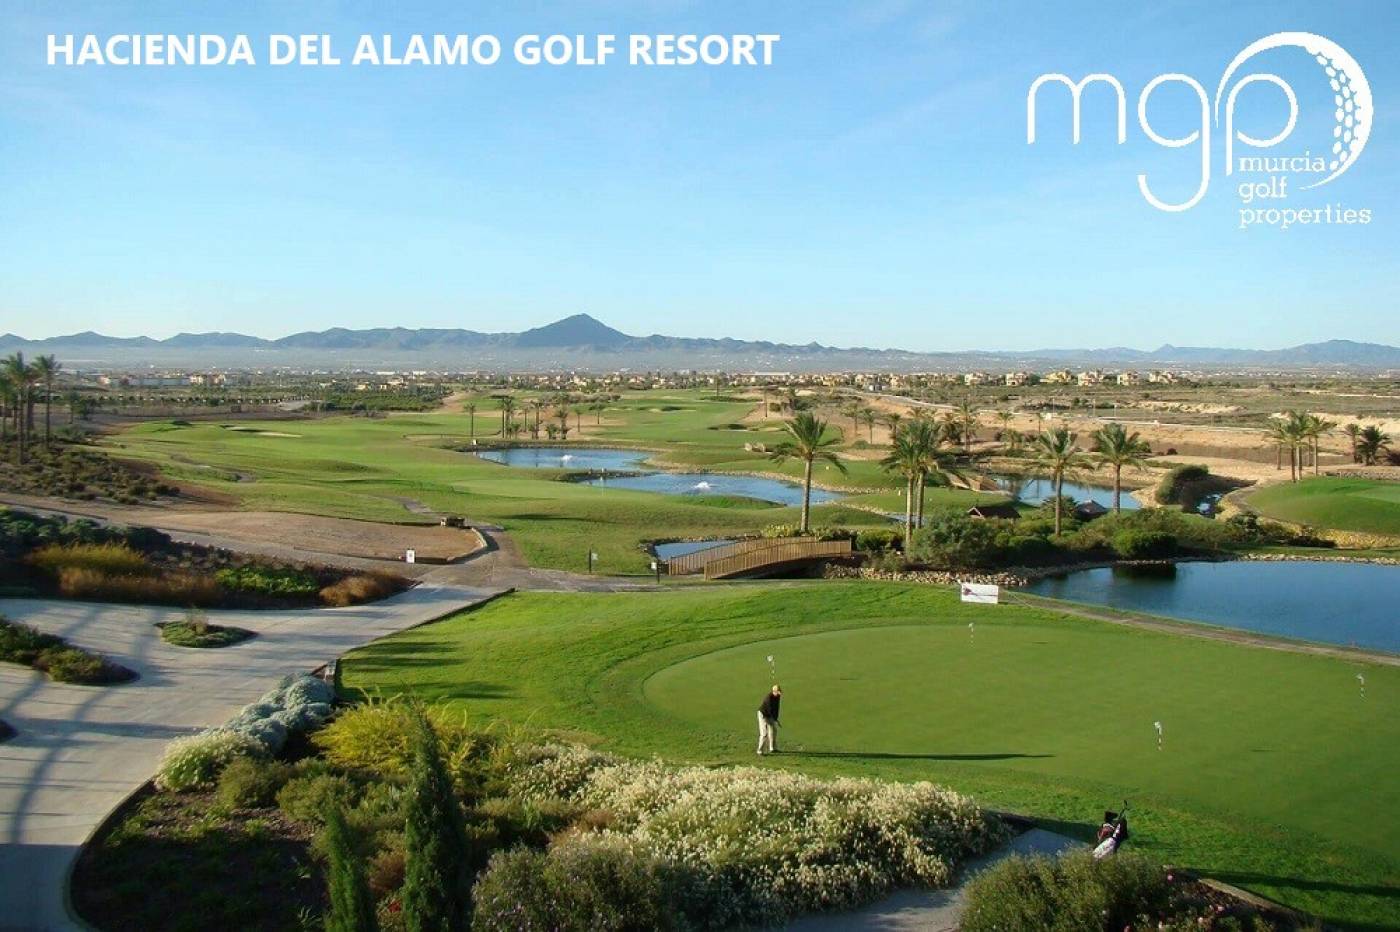 MGP - Golf & Coastal Properties award-winning specialist estate agent in the Murcia Region